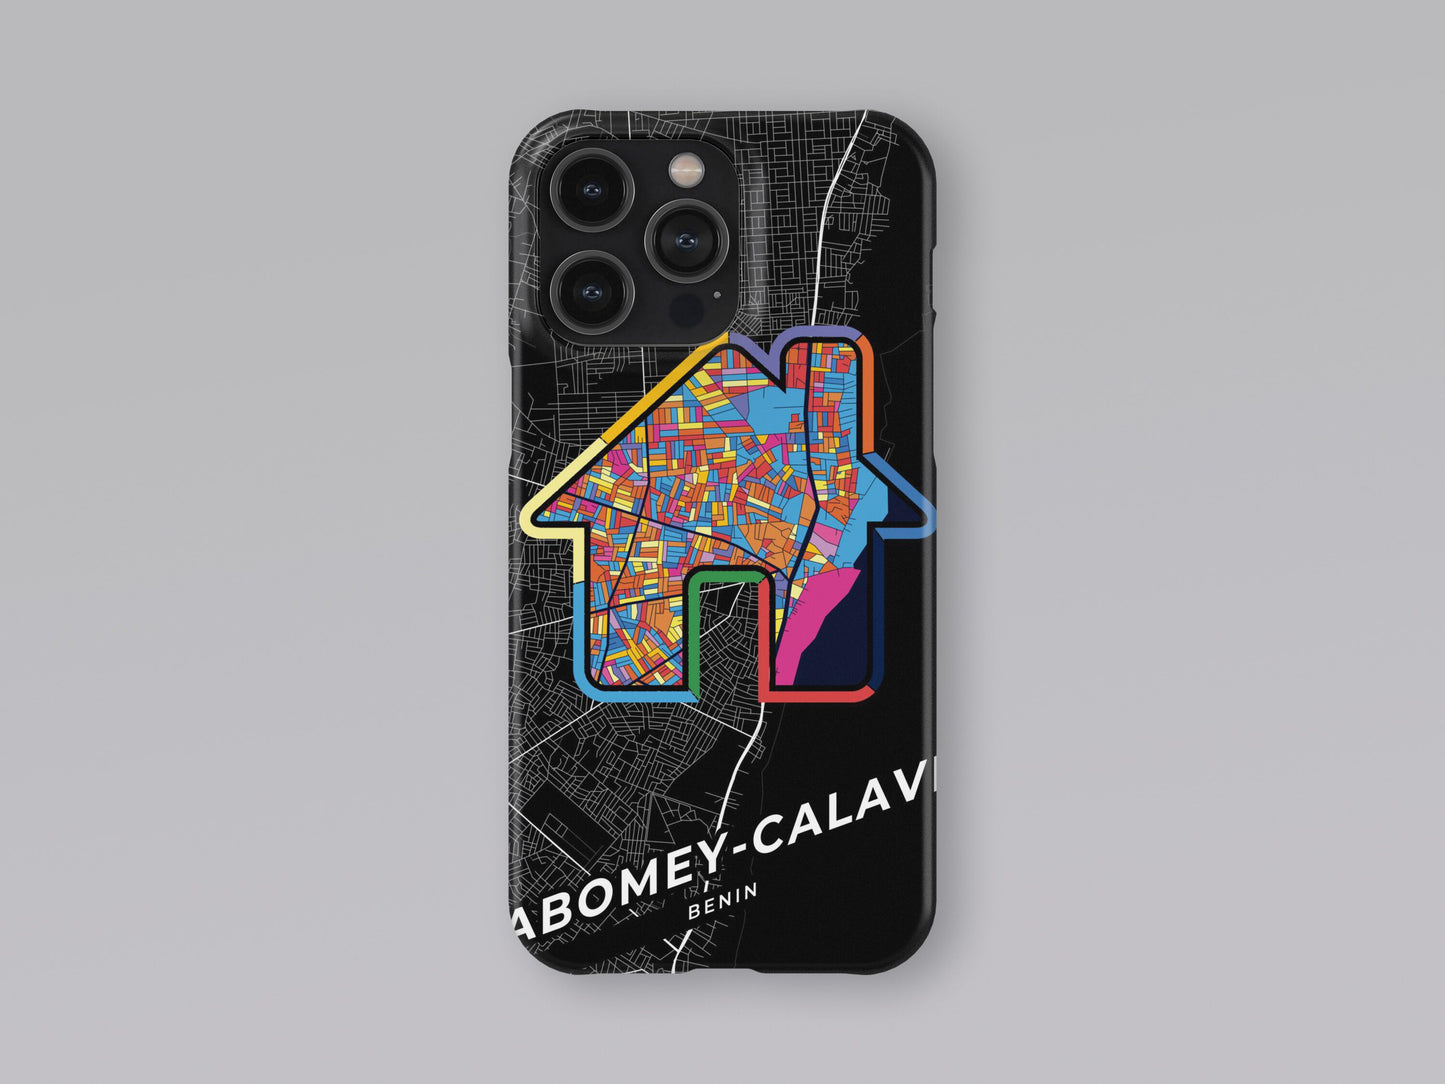 Abomey-Calavi Benin slim phone case with colorful icon. Birthday, wedding or housewarming gift. Couple match cases. 3